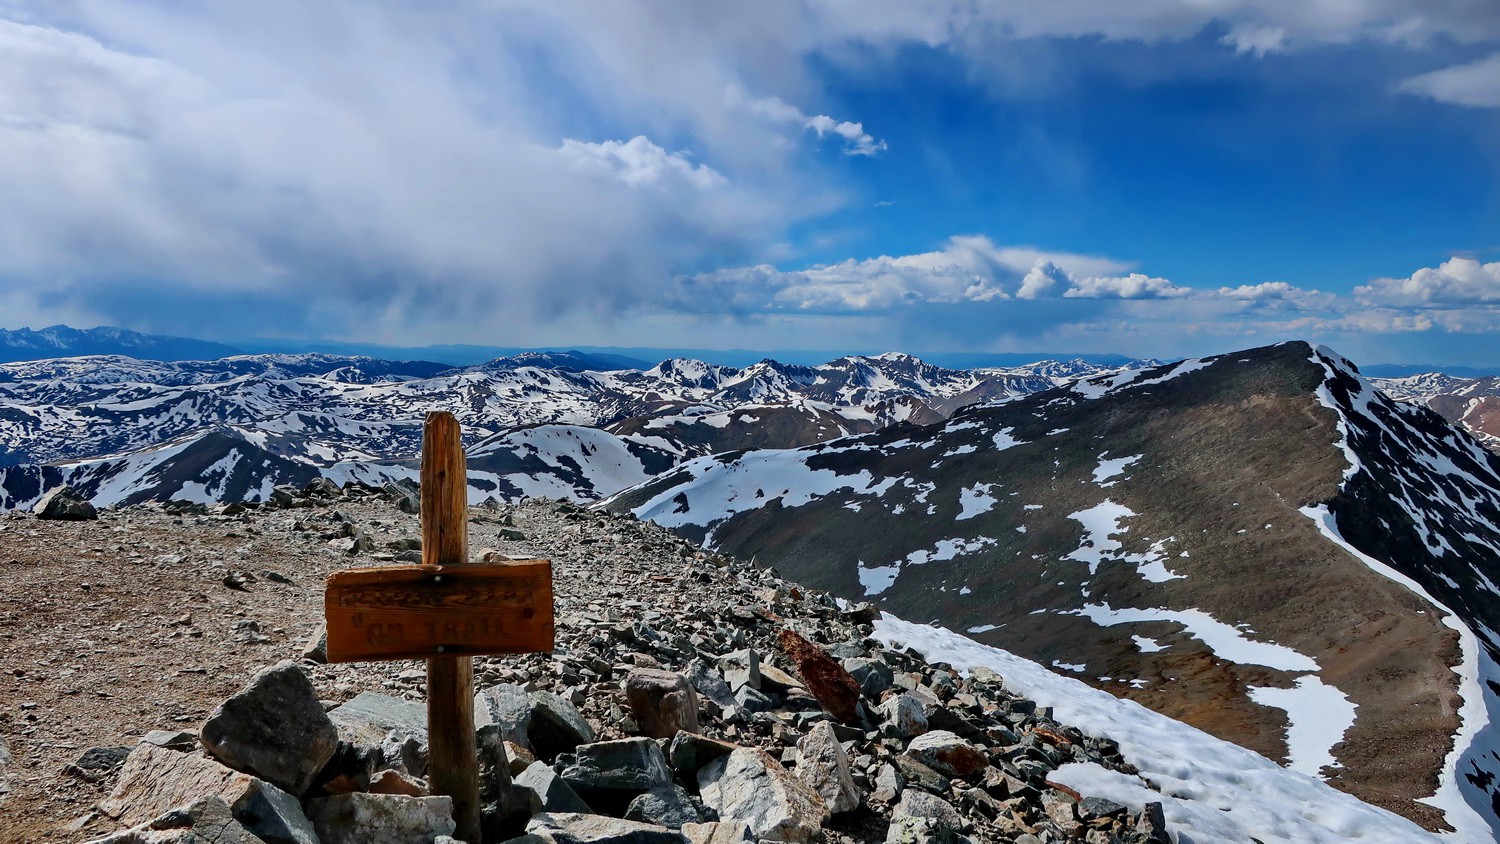 Summit of 4352 meters high Grays Peak with Torreys Peak on the right